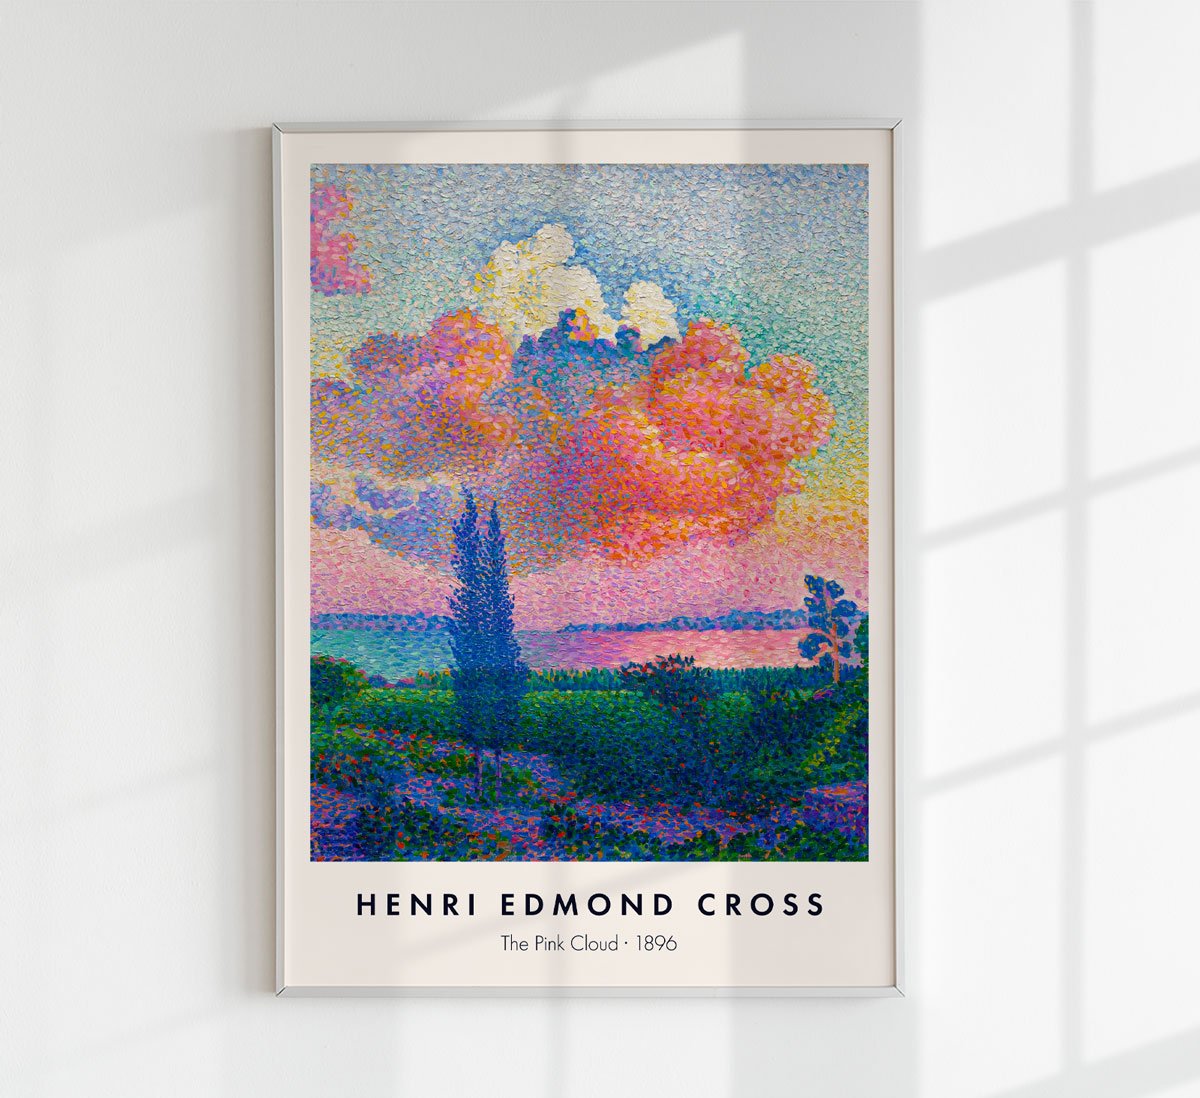 The Pink Cloud by Henri Edmond Cross